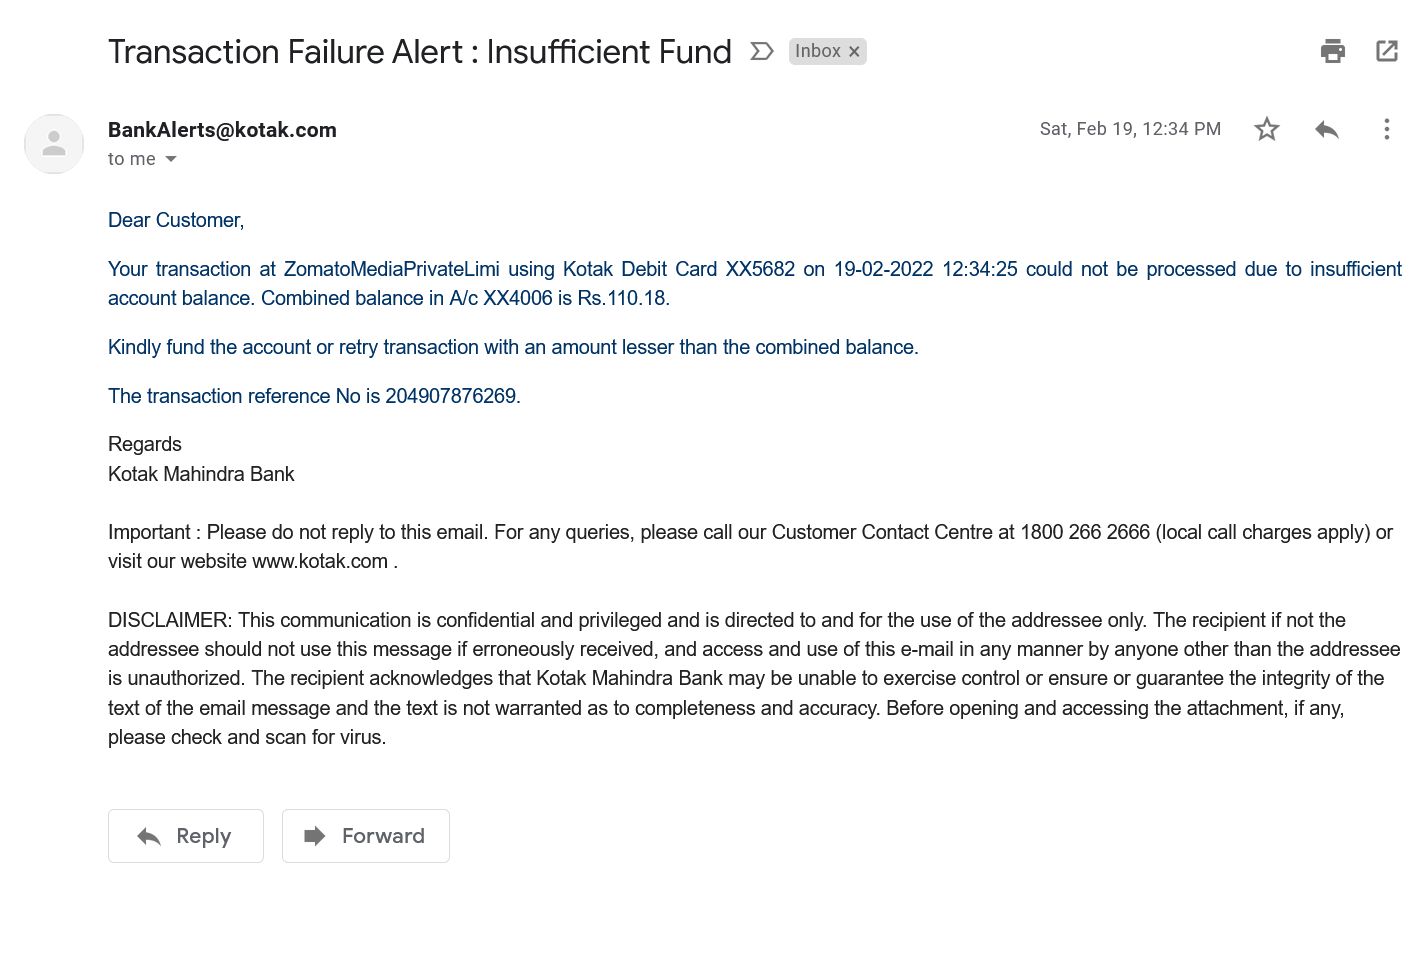 Kotak Mahindra Bank - Insufficient Fund - Data Leak - 01